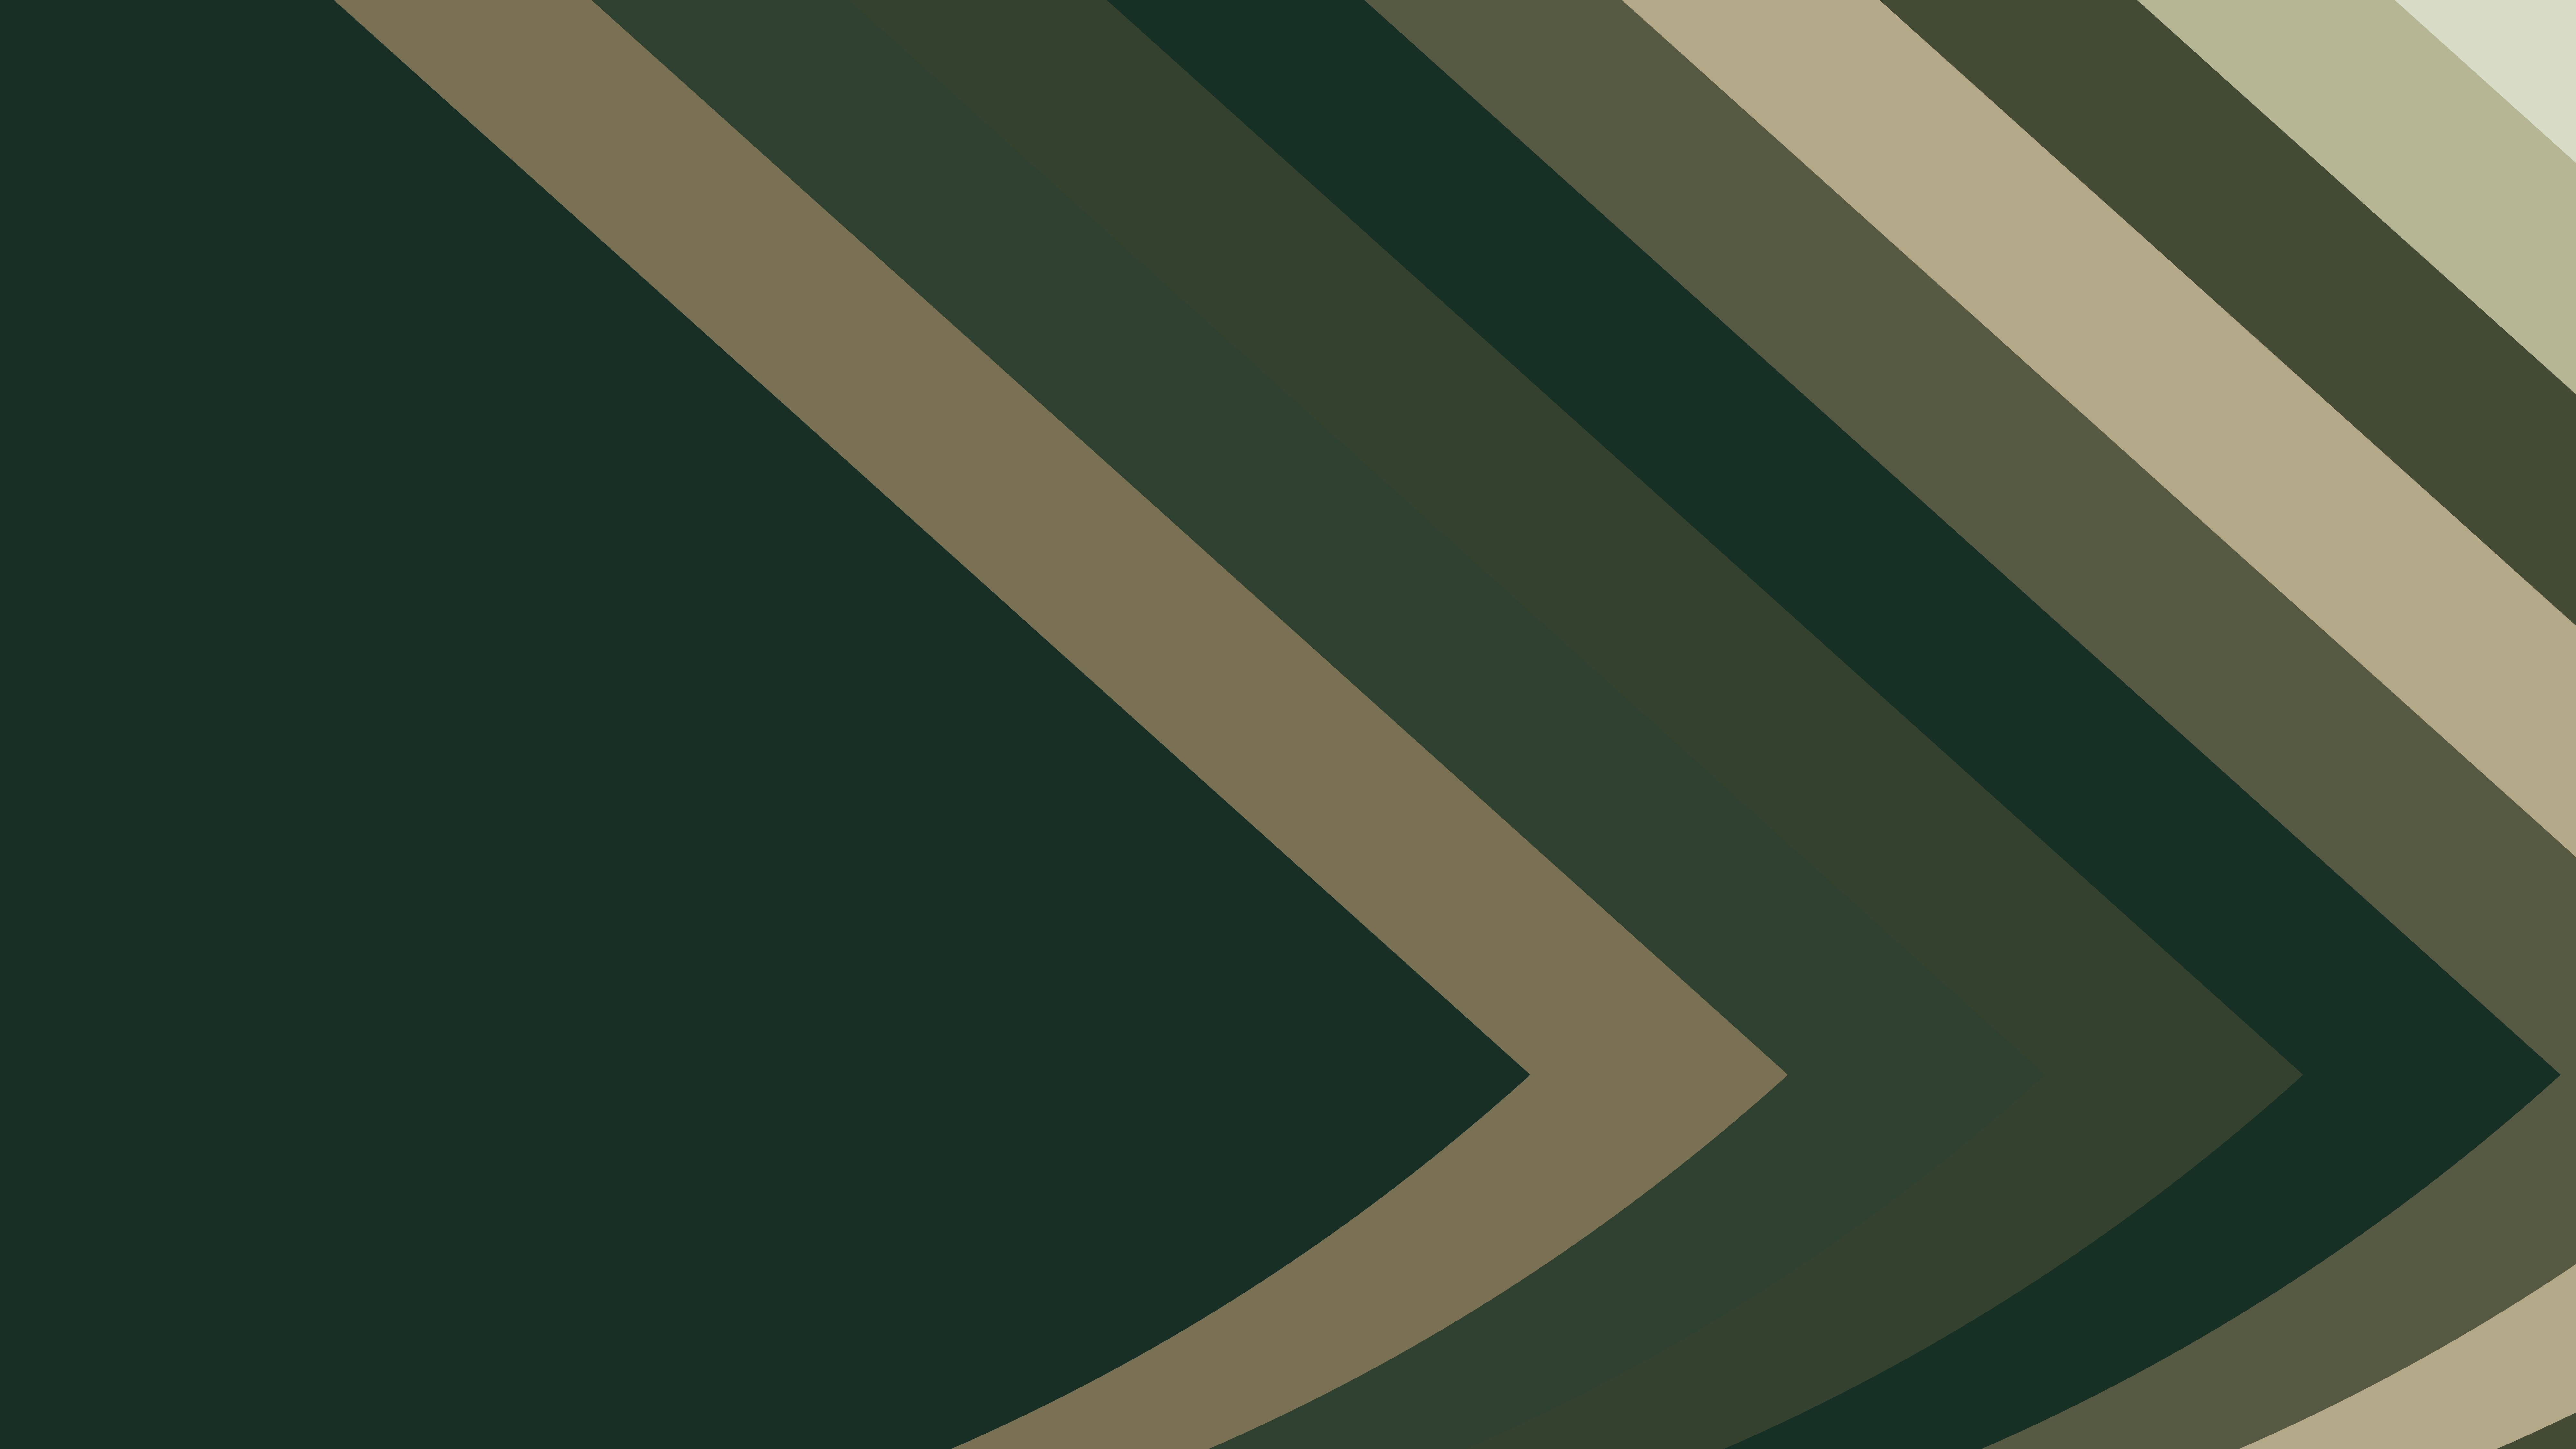 Dark Green Arrow Background Vector Illustration